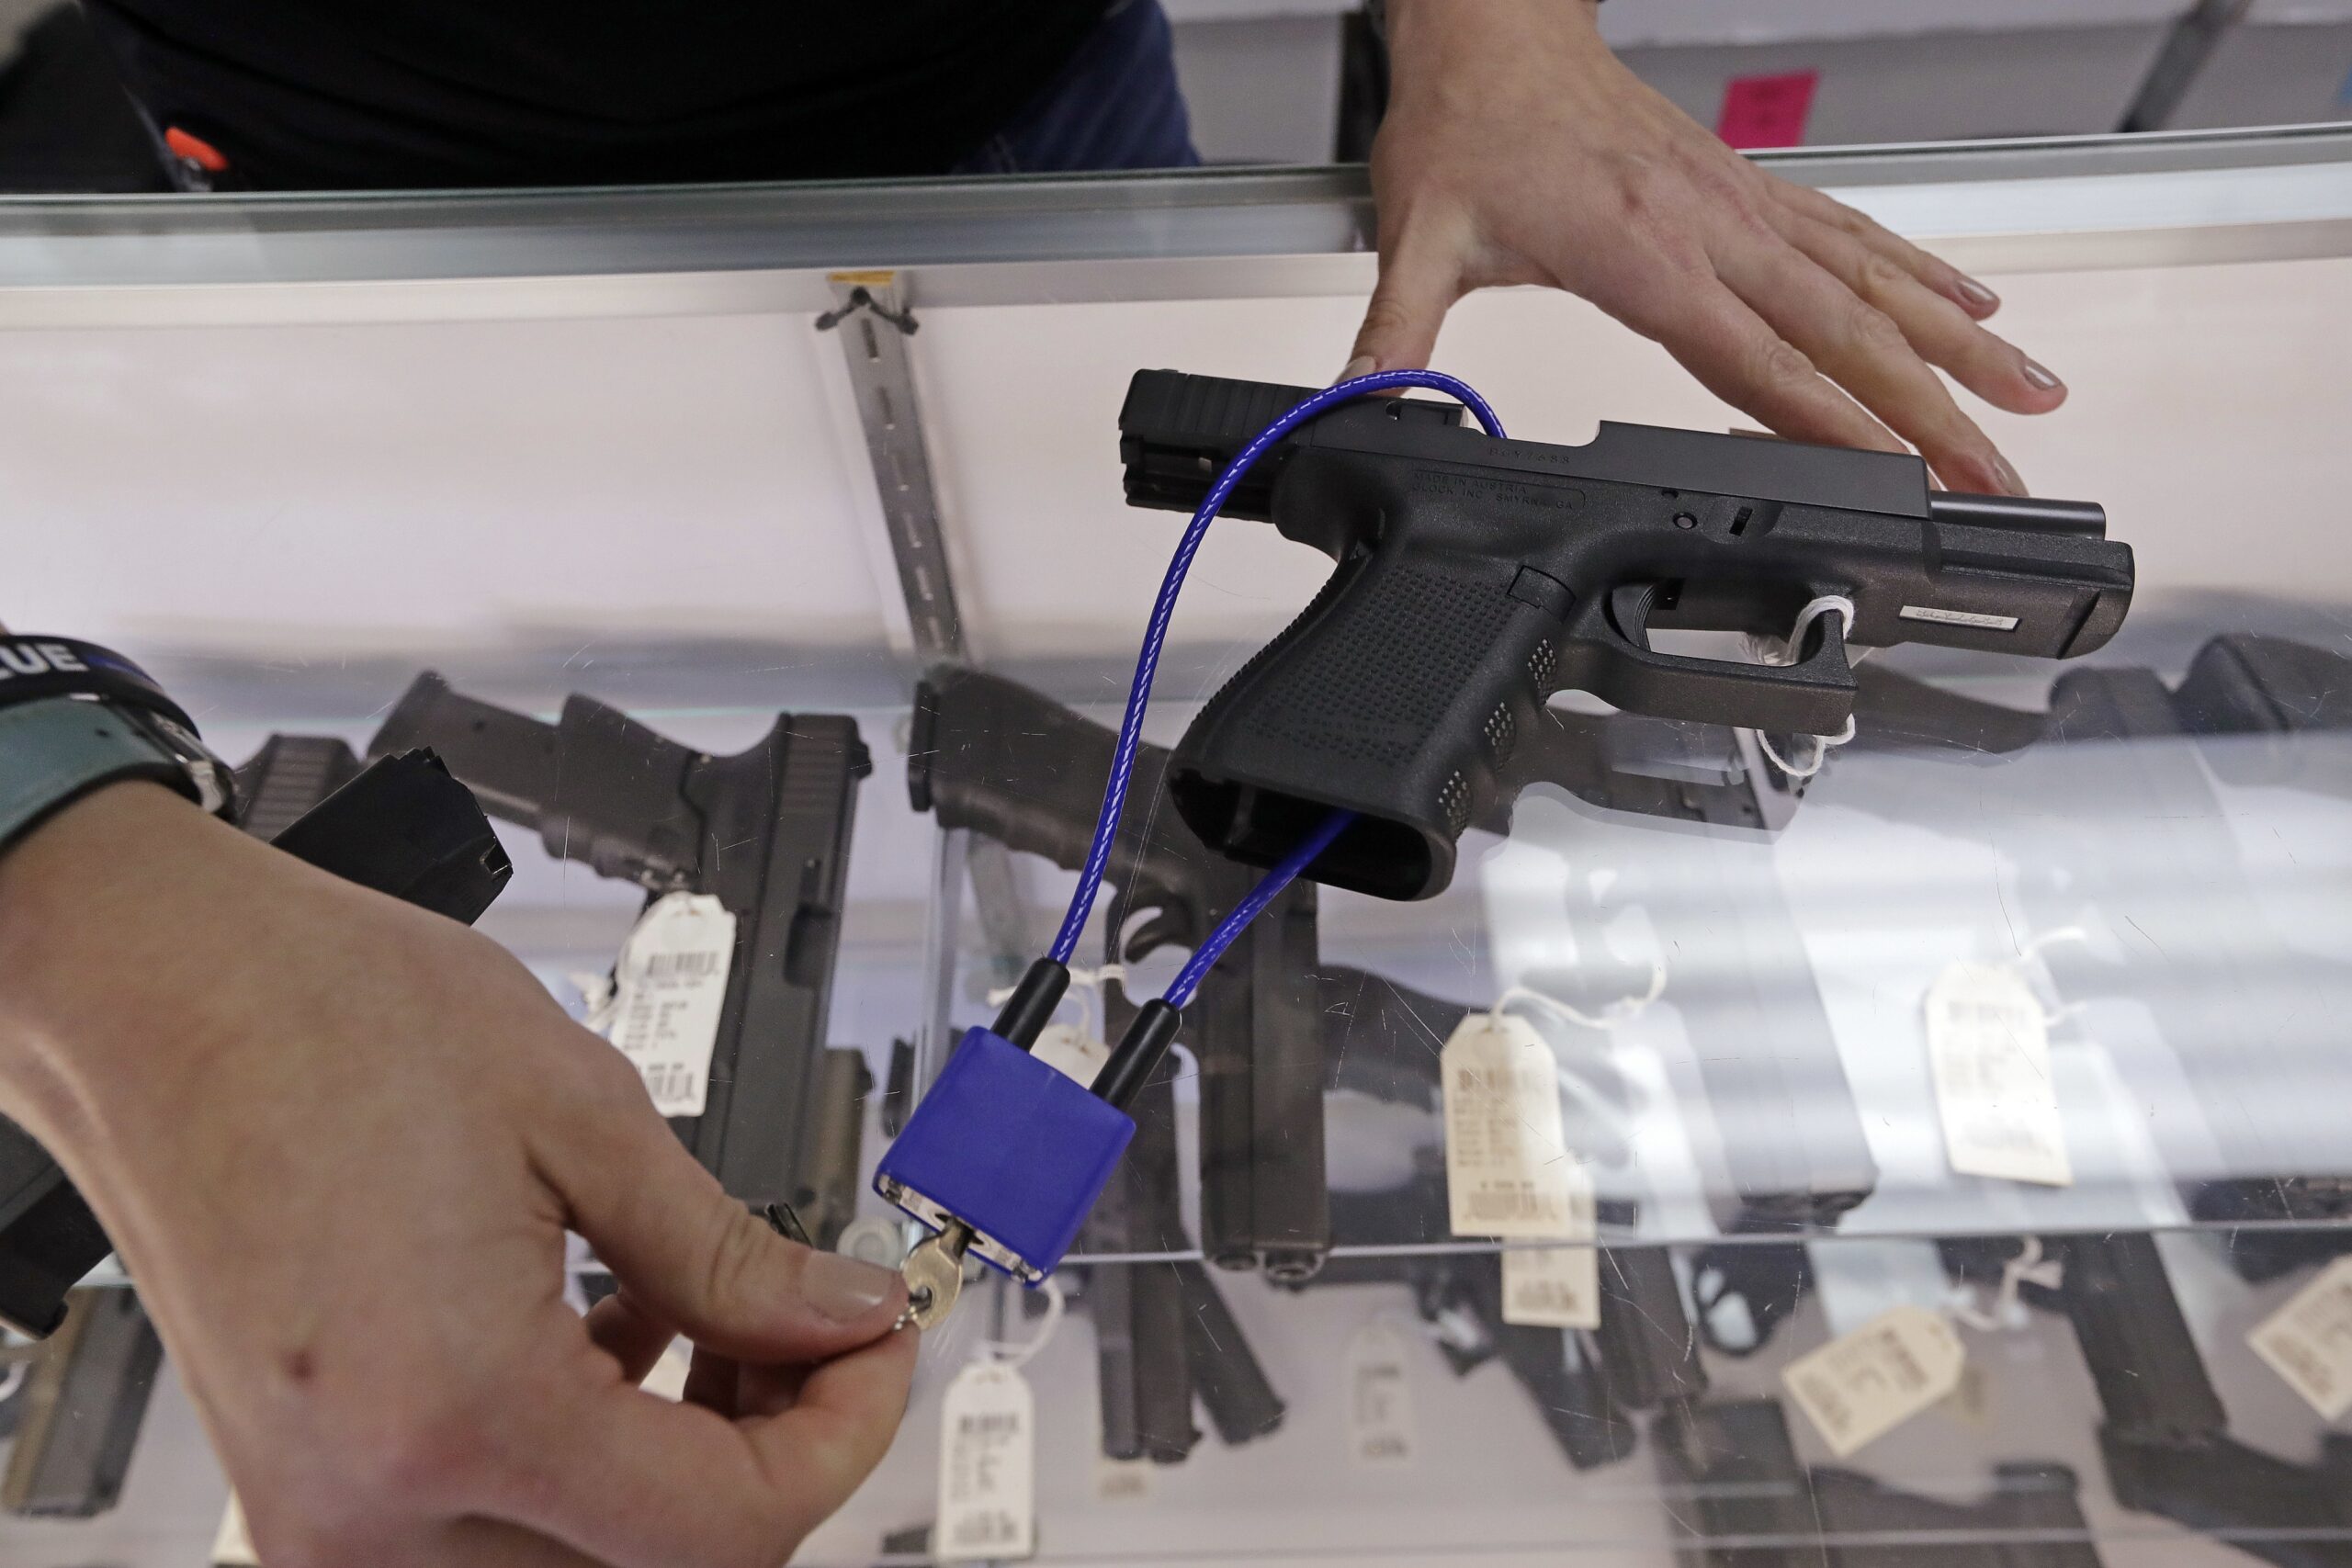 Amid push to prevent summertime violence, Wisconsin Democrats reintroduce gun safety bills